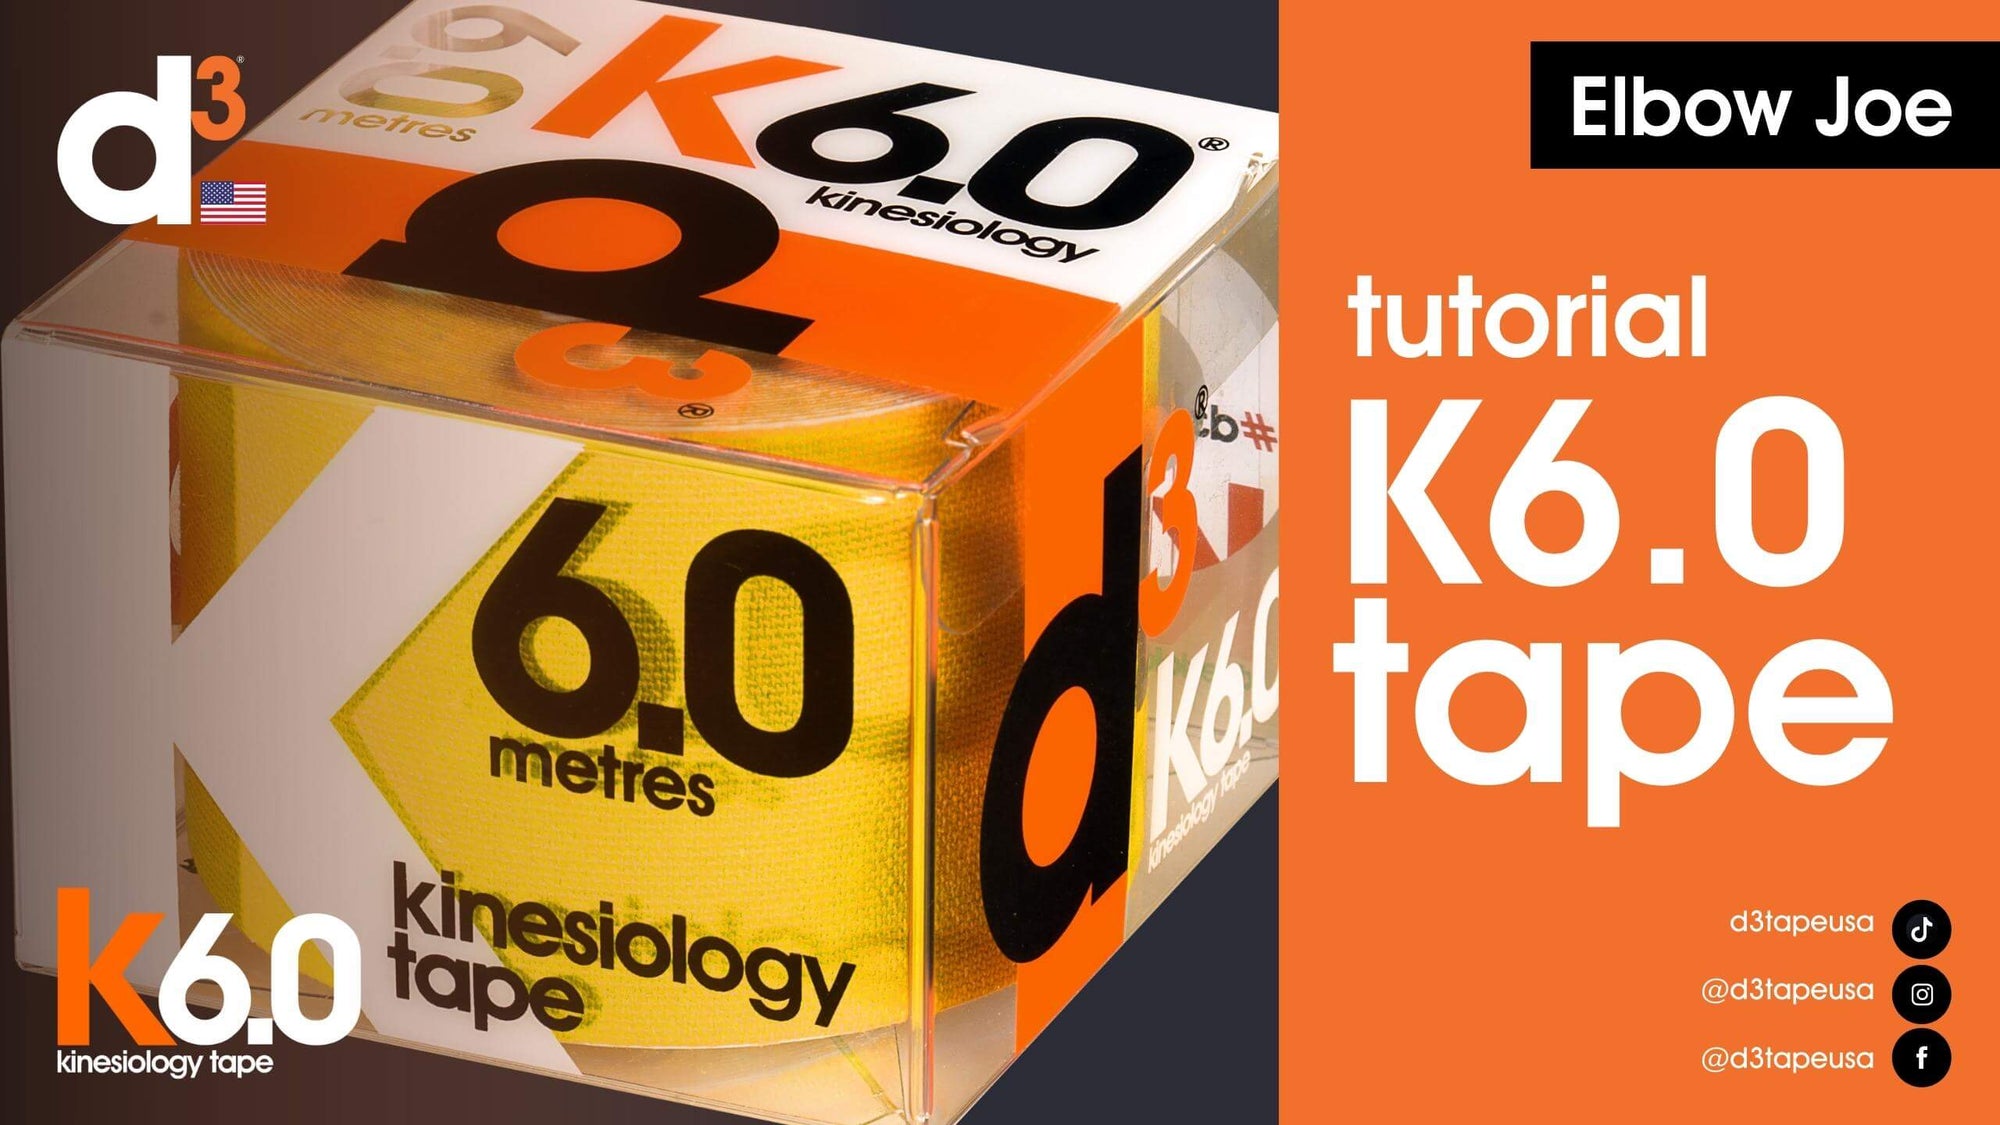 Tutorial - Elbow Joe - K6.0 Kinesiology Tape